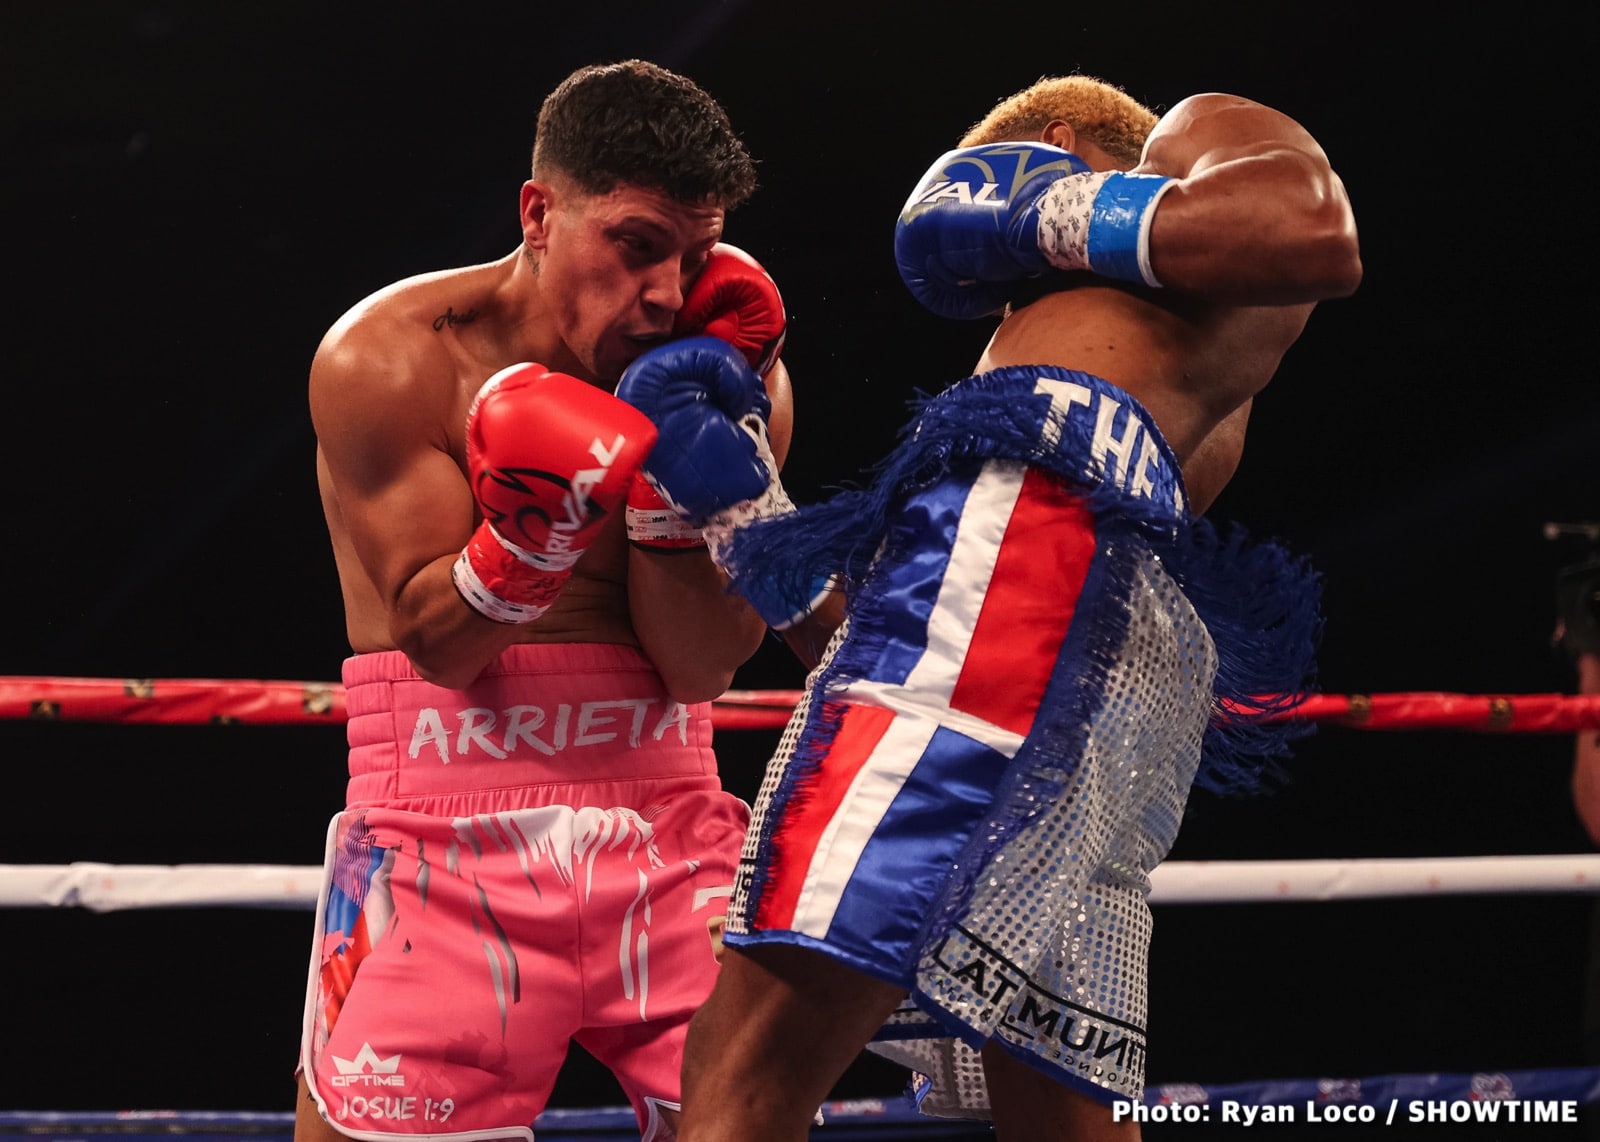 Luis Nunez stops Carlos Arrieta - Boxing Results